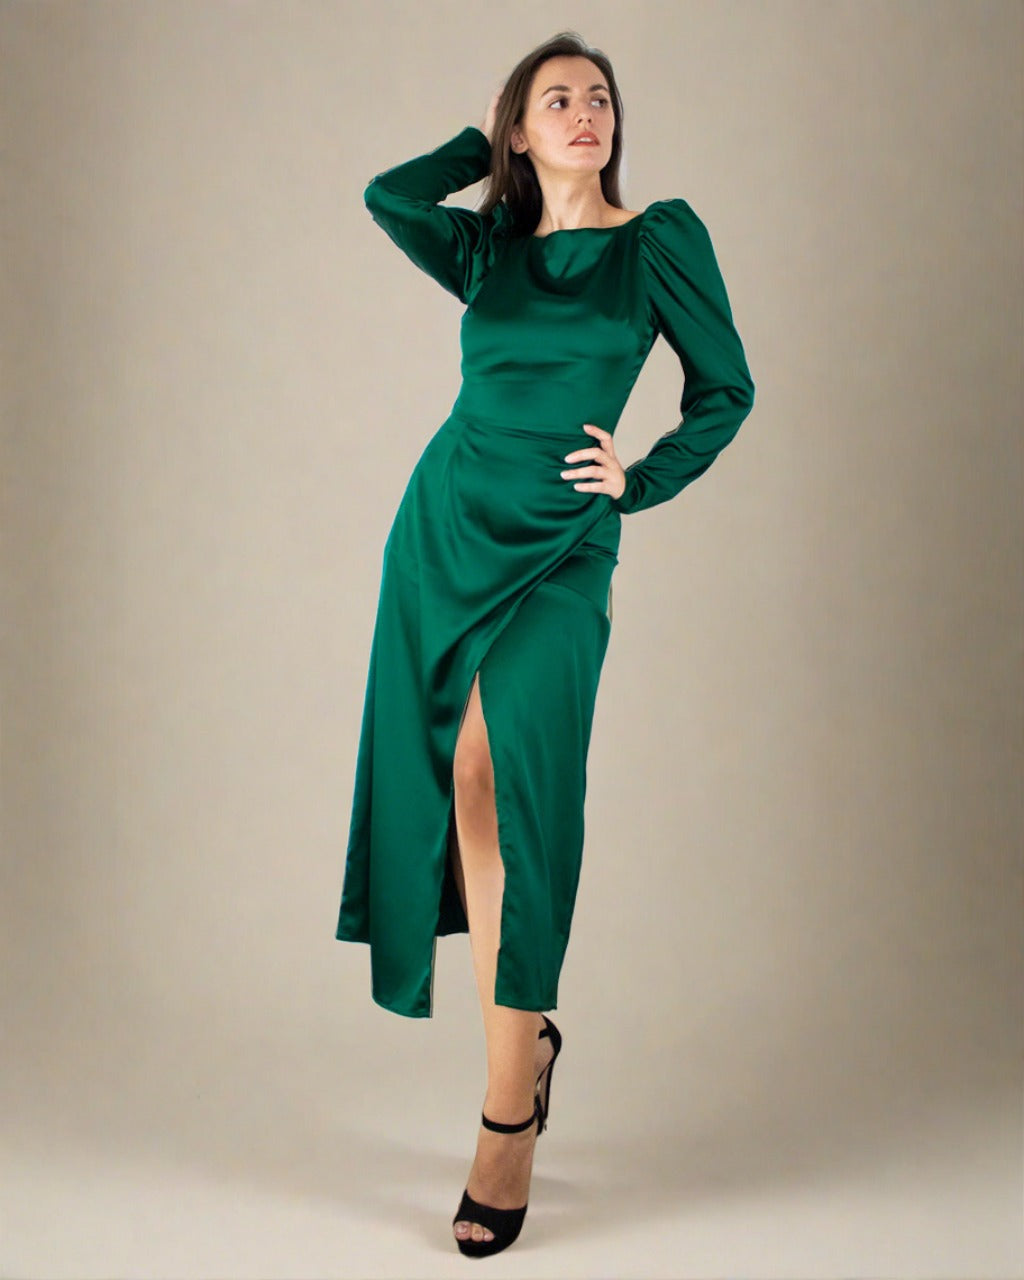 Long Sleeve Green Dress - Emerald Green Satin Dress | ADKN UK